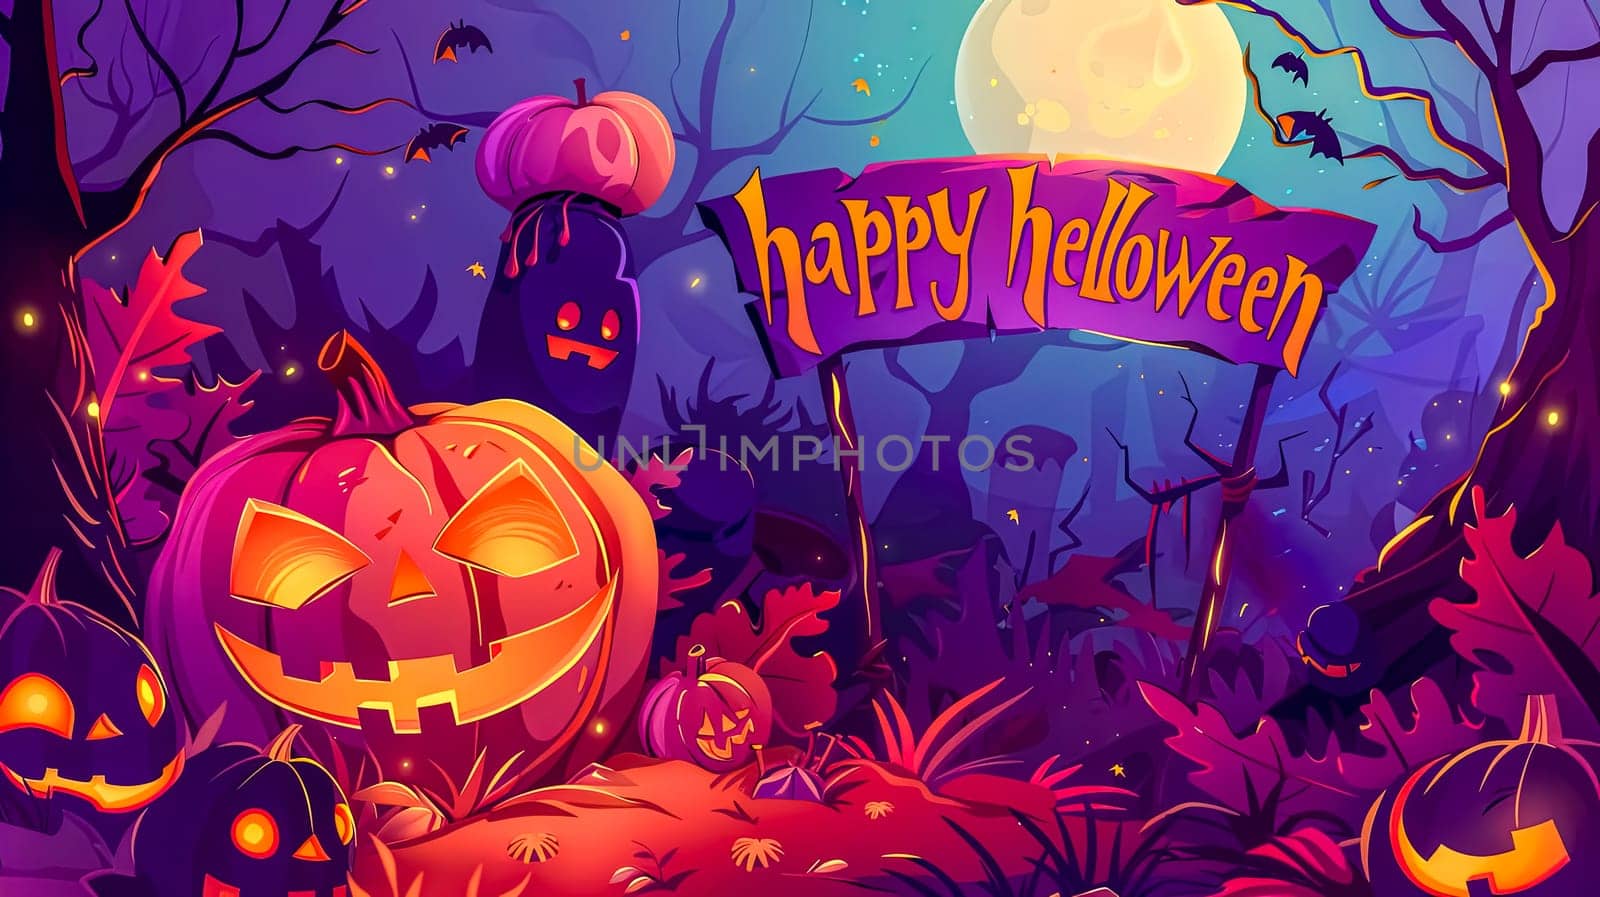 Vibrant halloween night landscape illustration by Edophoto